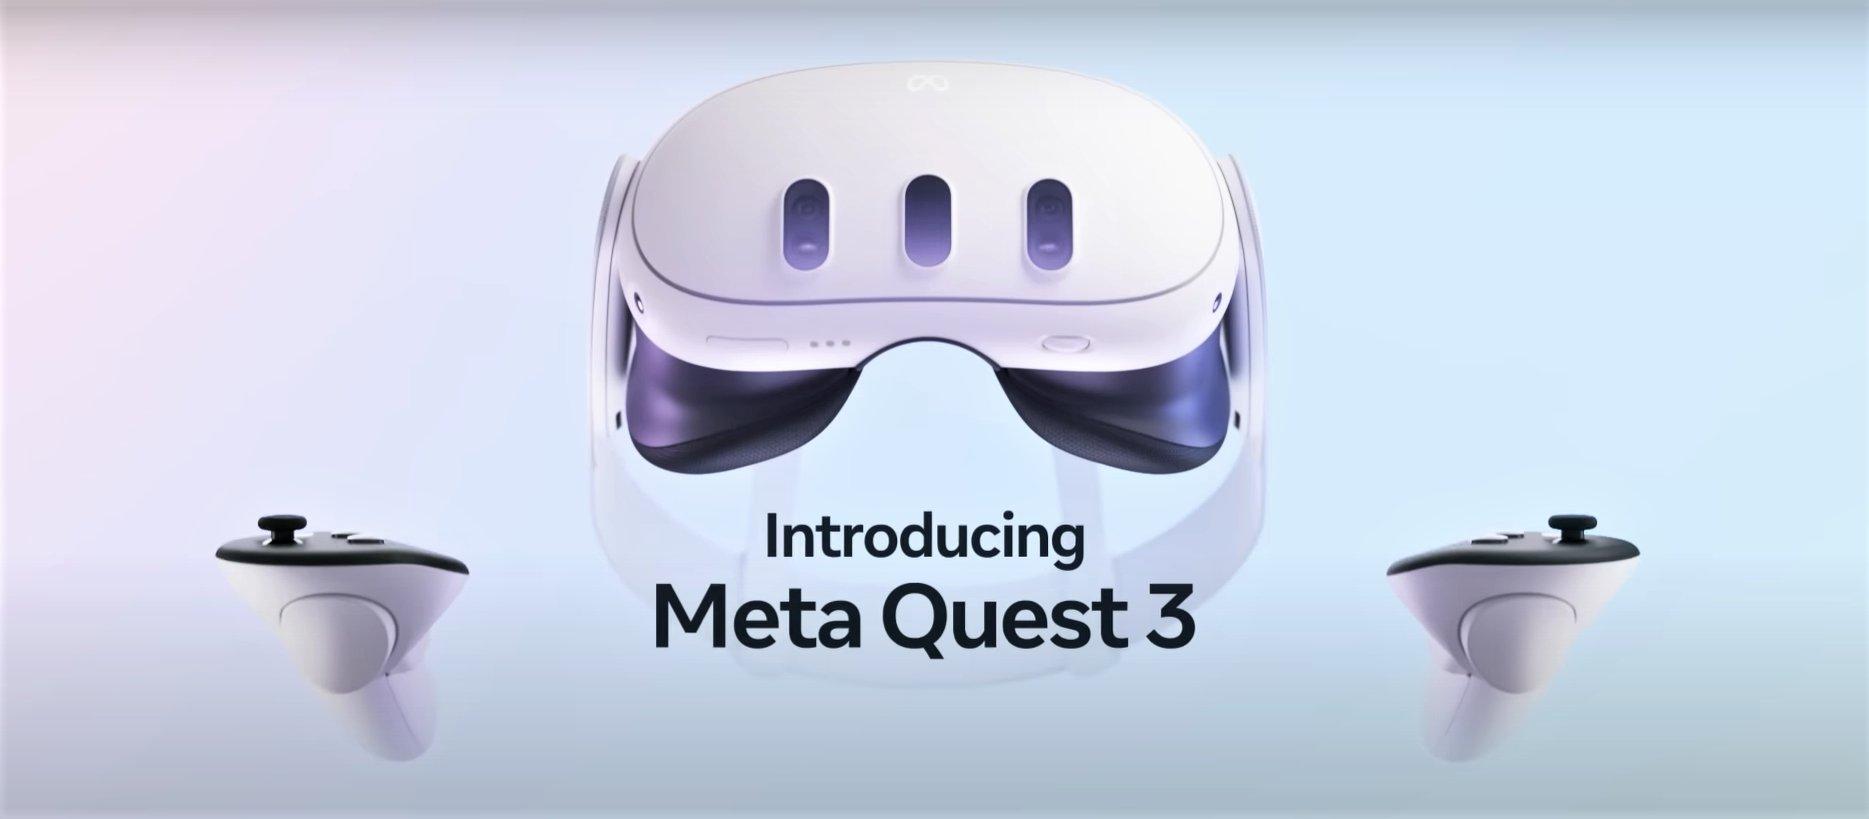 نظارة اوكلس 3 الواقع المختلط | Oculus Quest 3 GB All-In-One Virtual Reality Headset (VR) - White